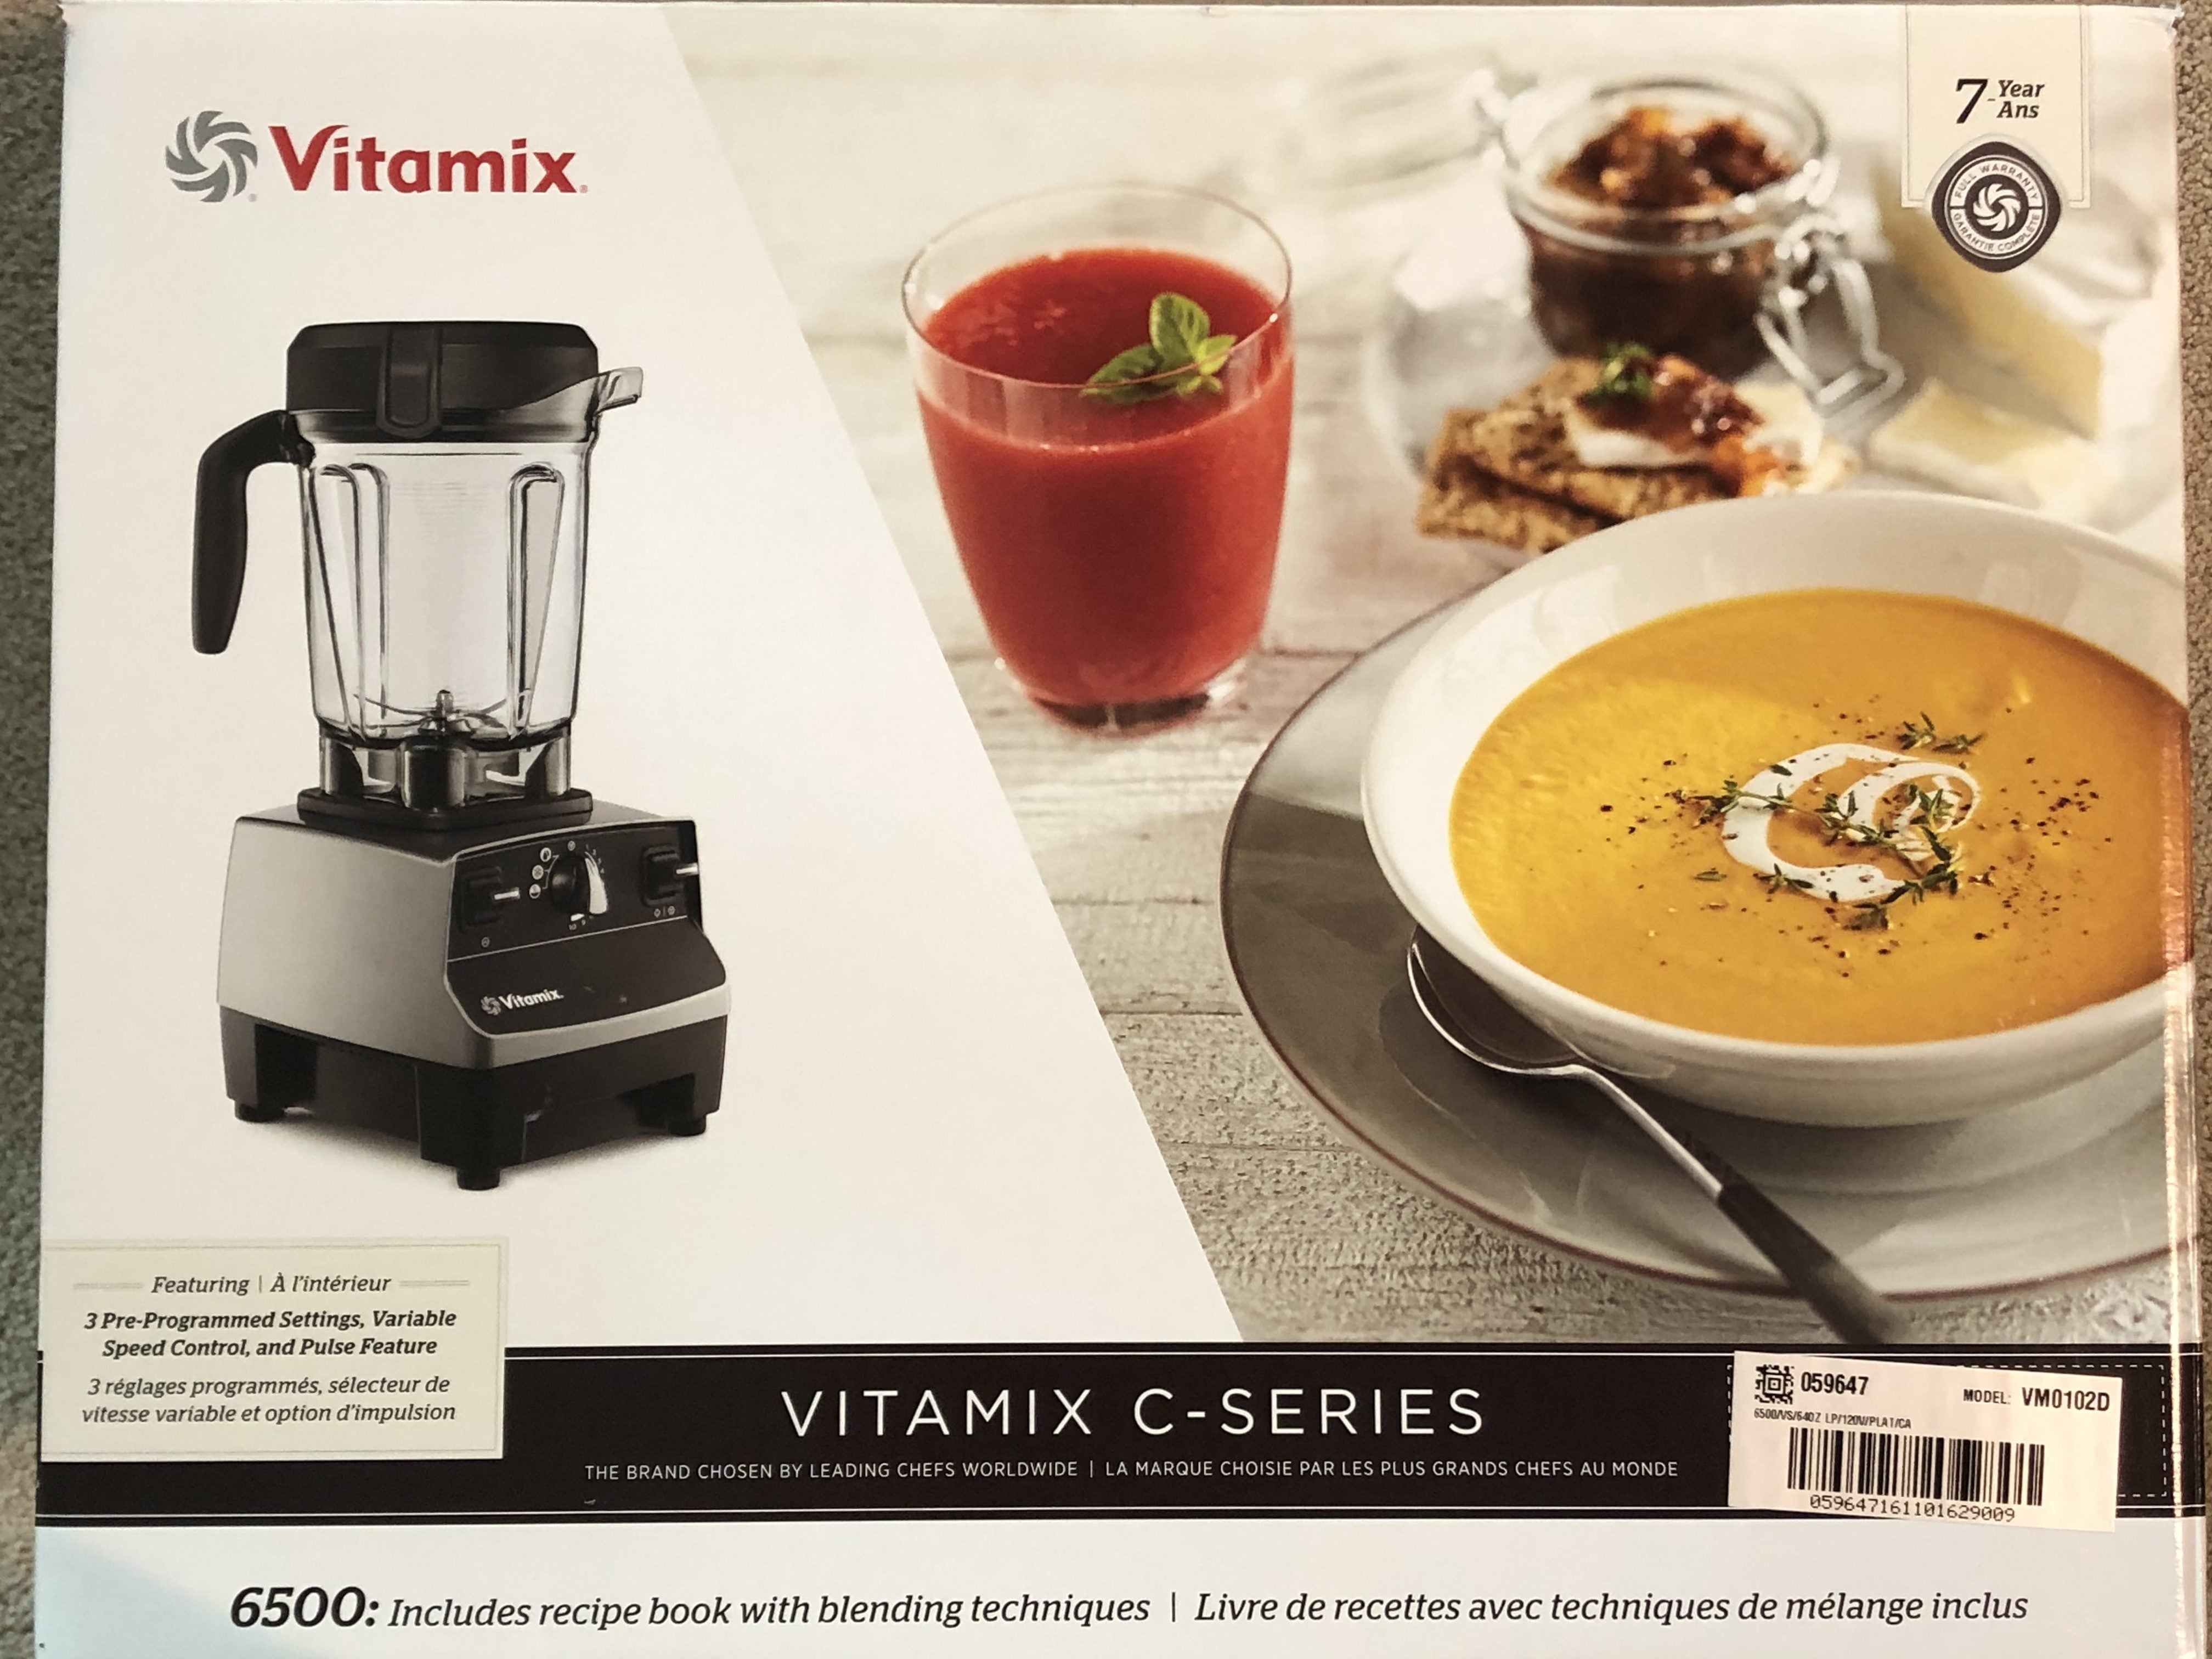 Costco] Vitamix Immersion Blender Bundle $229.99 - RedFlagDeals.com Forums